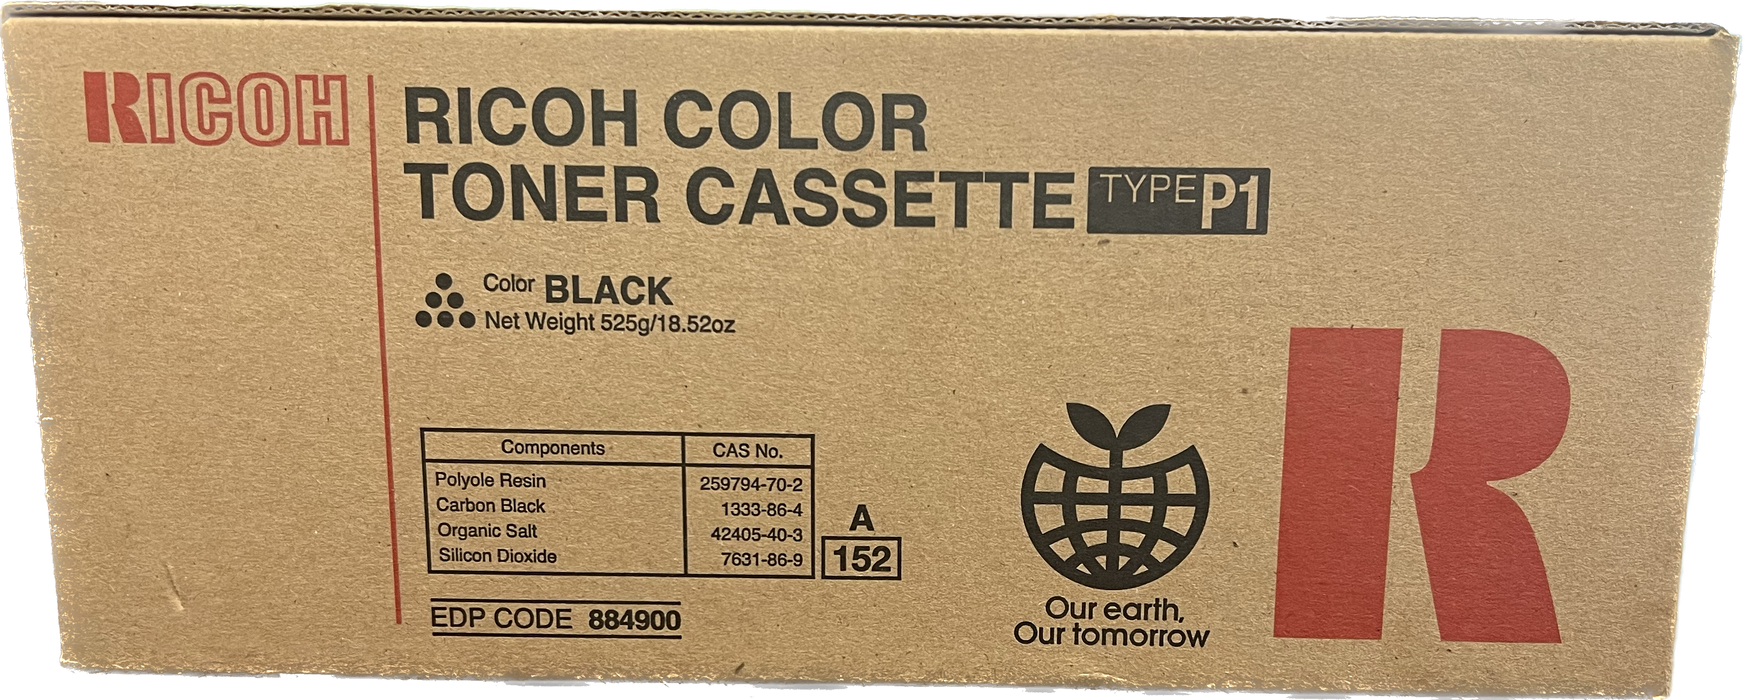 Genuine Ricoh Black Toner Cartridge | 884900 | Type P1